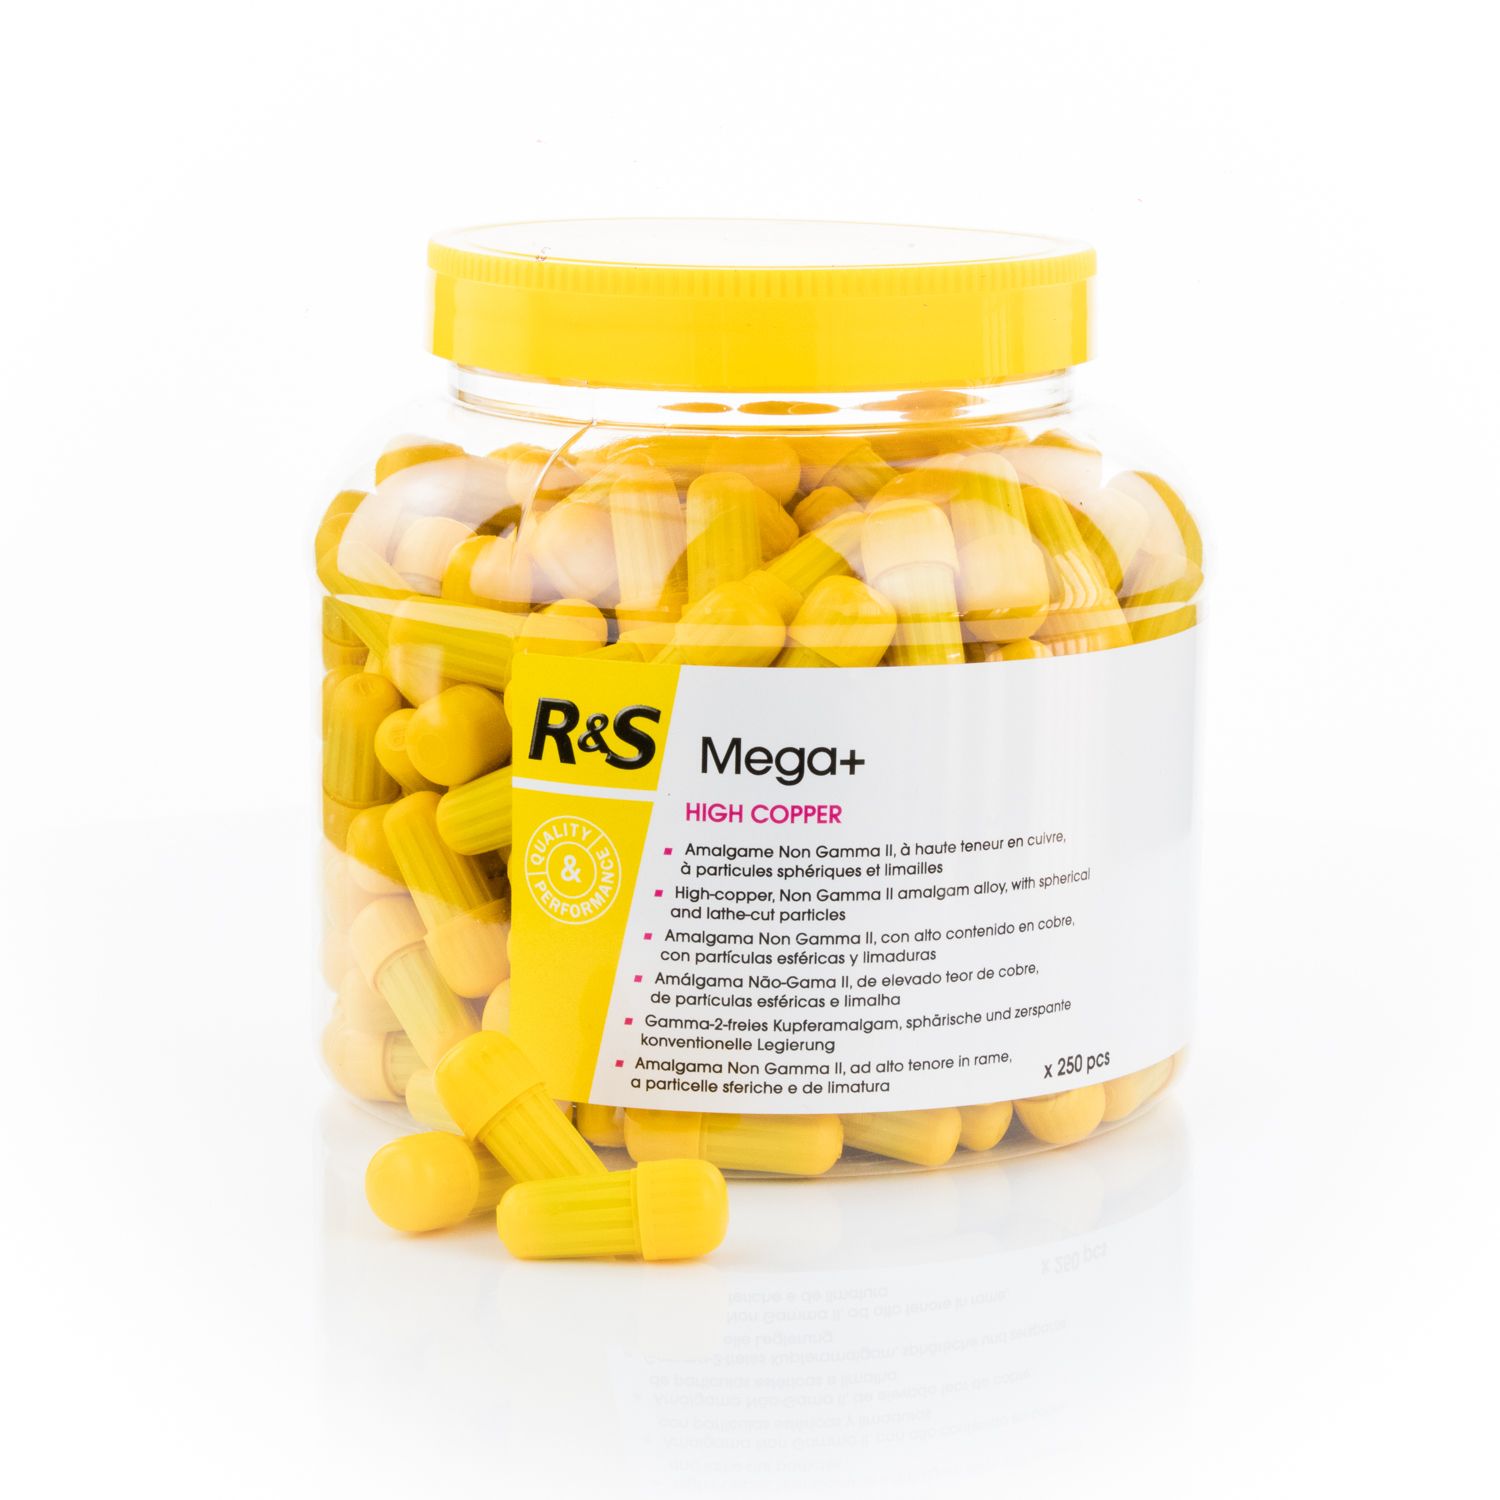 参比制剂,进口原料药,医药原料药 R&S Mega+ Amalgam Capsules: Standard Set - Spill 2 (250)